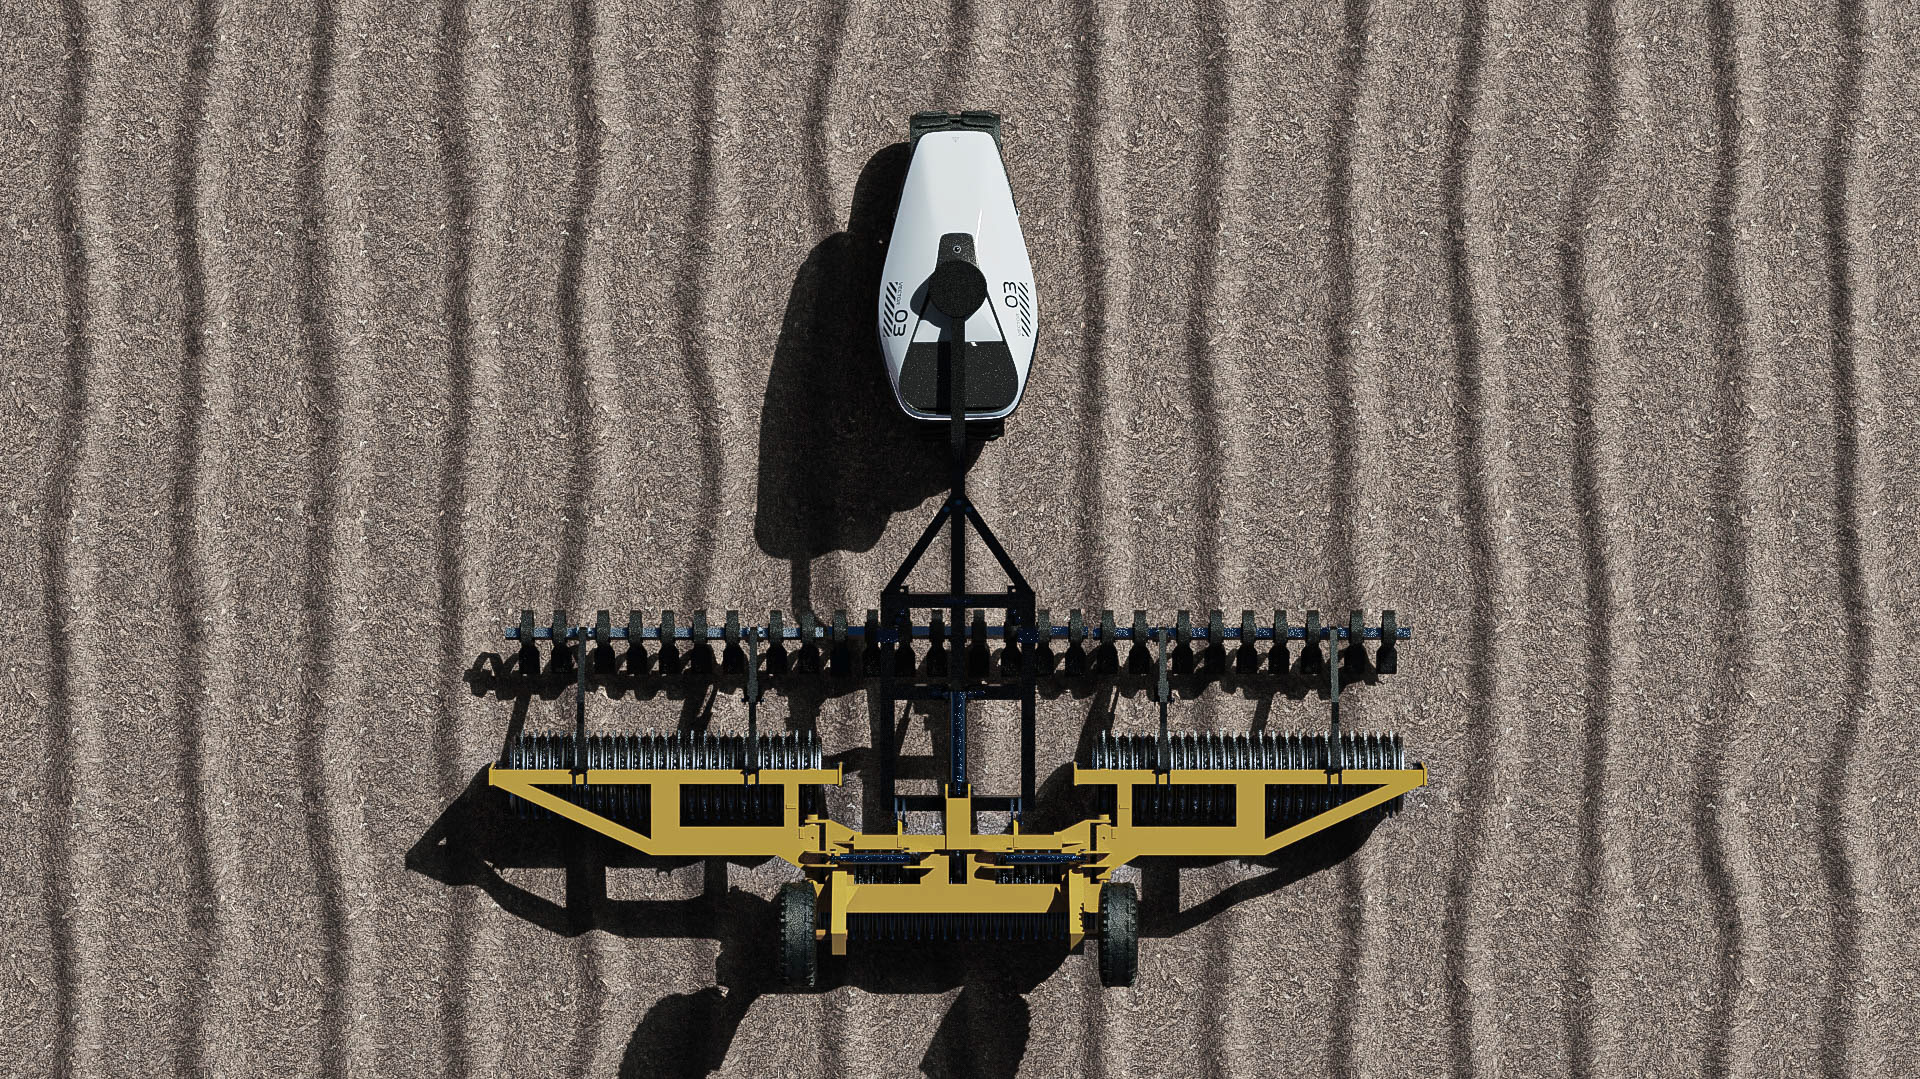 VKTOR - Autonomous Farming Vehicle by Alessandro Pennese